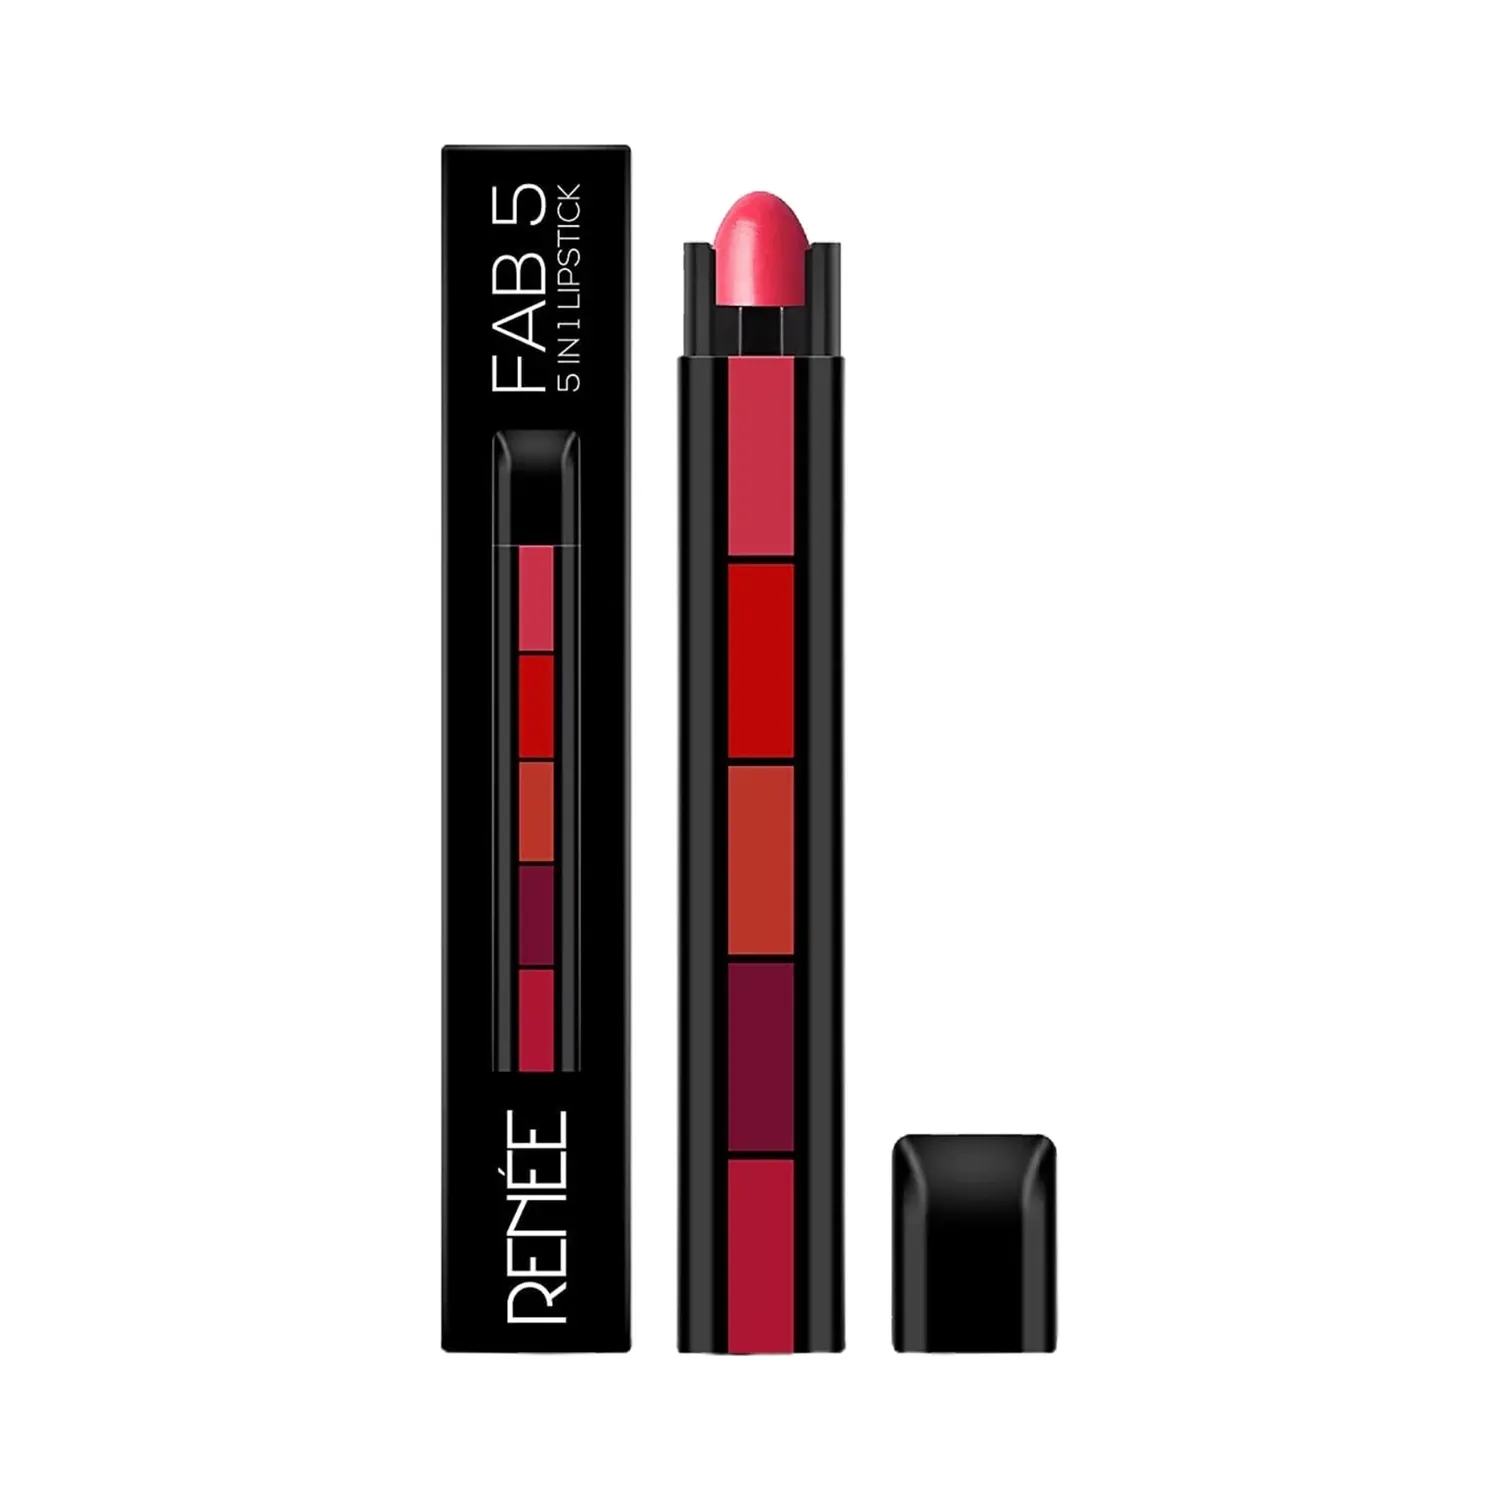 RENEE | RENEE Fab 5 5-In-1 Lipstick (7.5g)